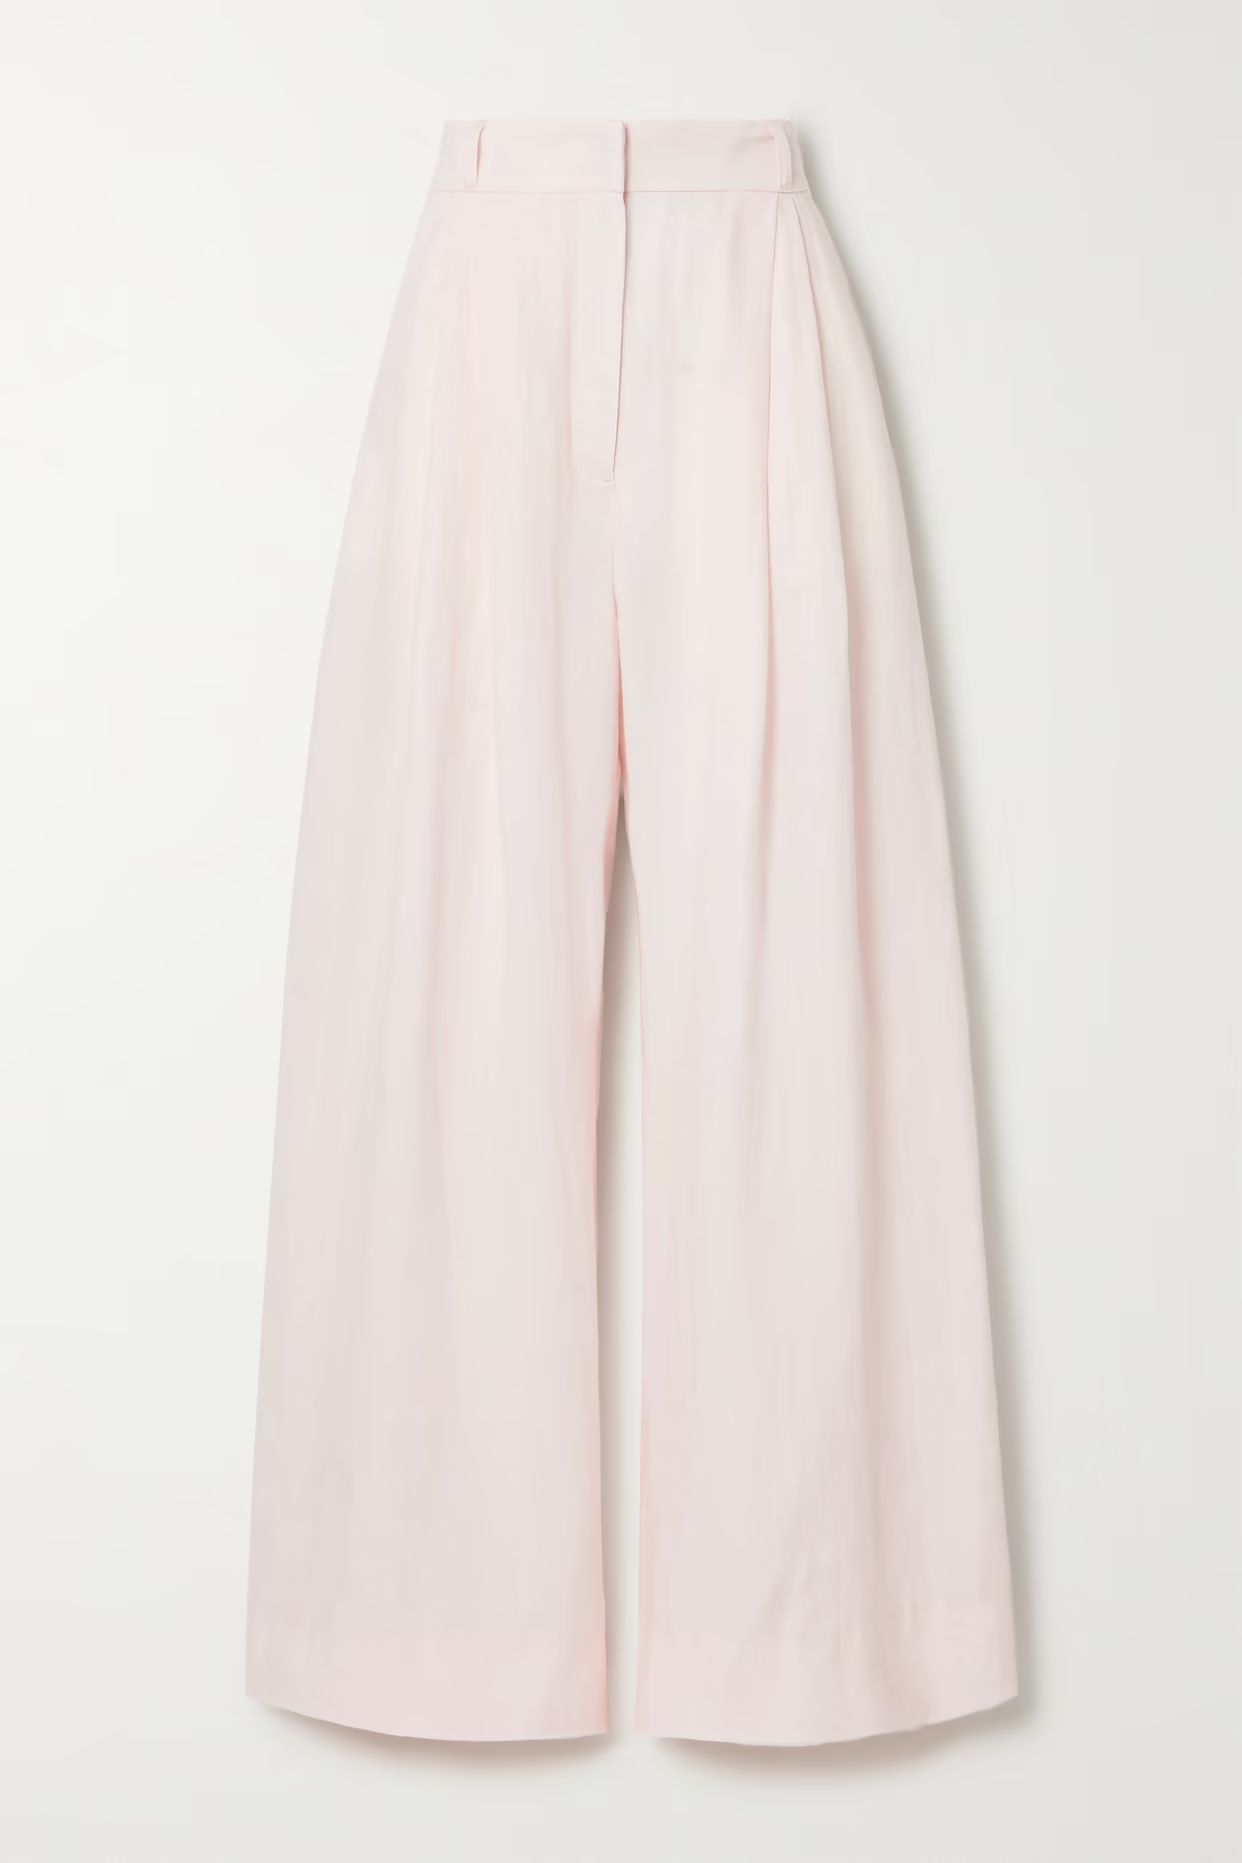 Three Graces London - Molly Pleated Linen Wide-leg Pants - Baby pink | NET-A-PORTER (UK & EU)